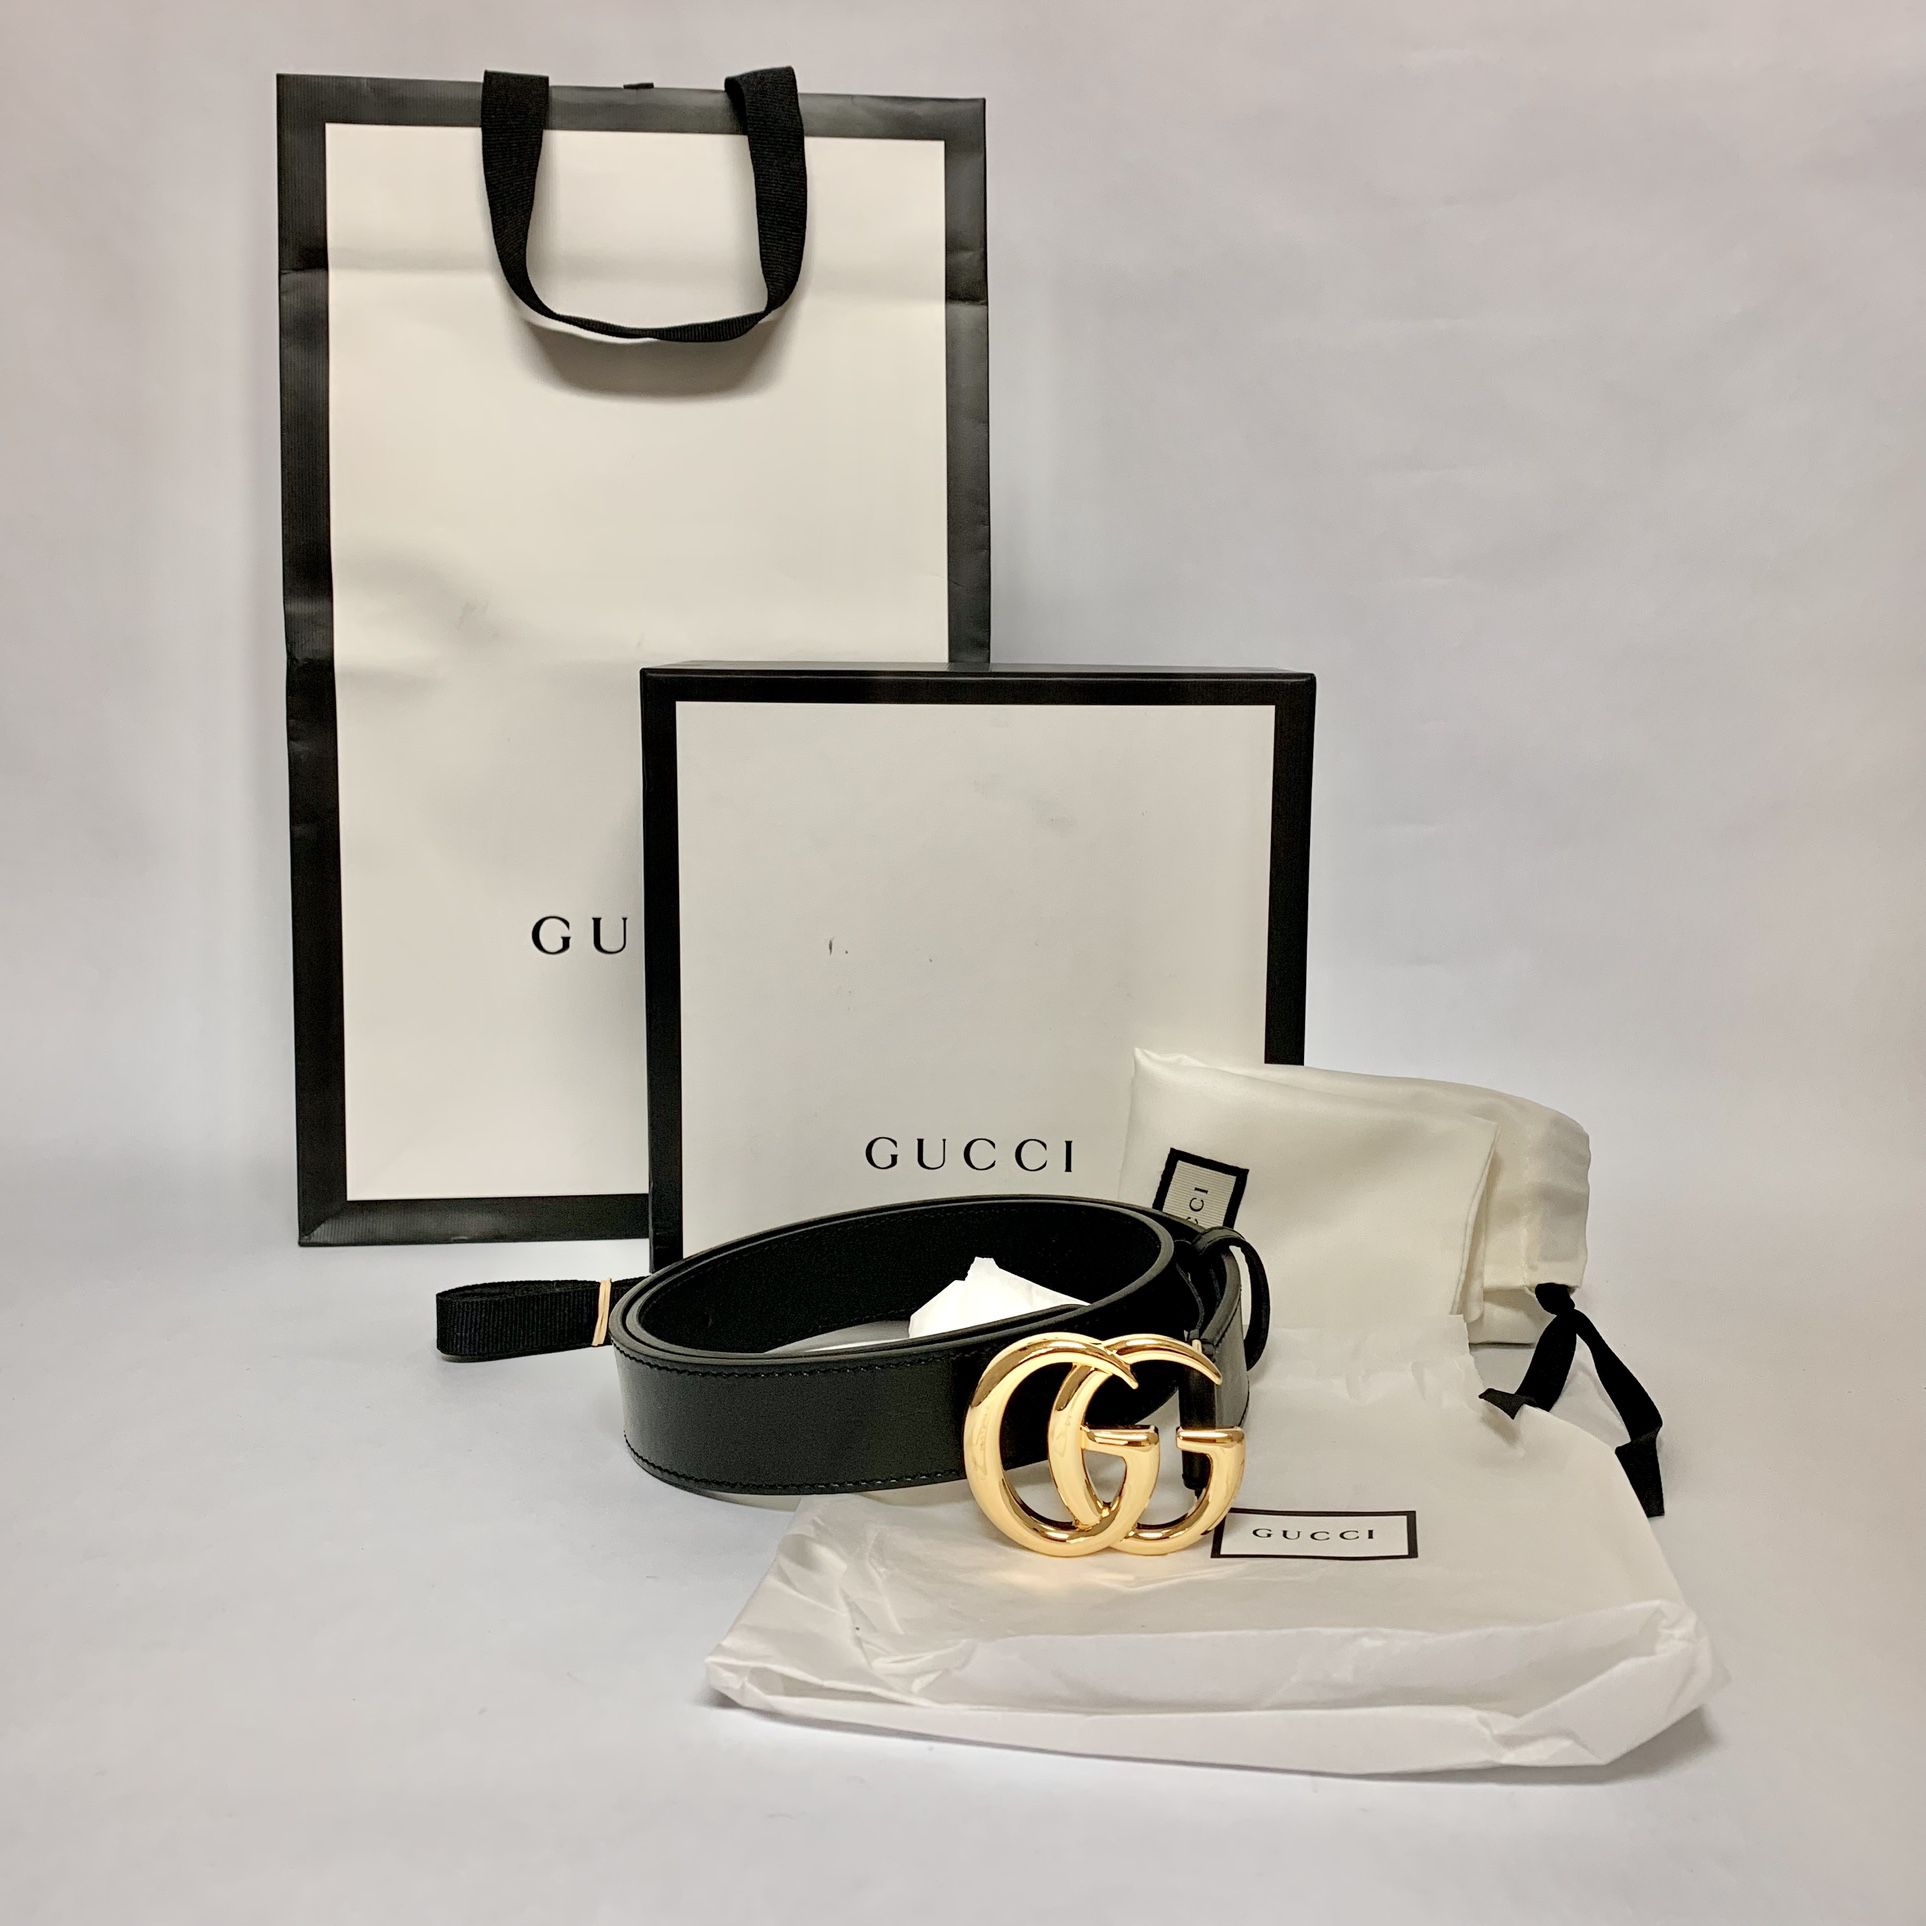 Gucci GG Marmont Belt w/ Shiny Buckle Size 75/30 US Size 24